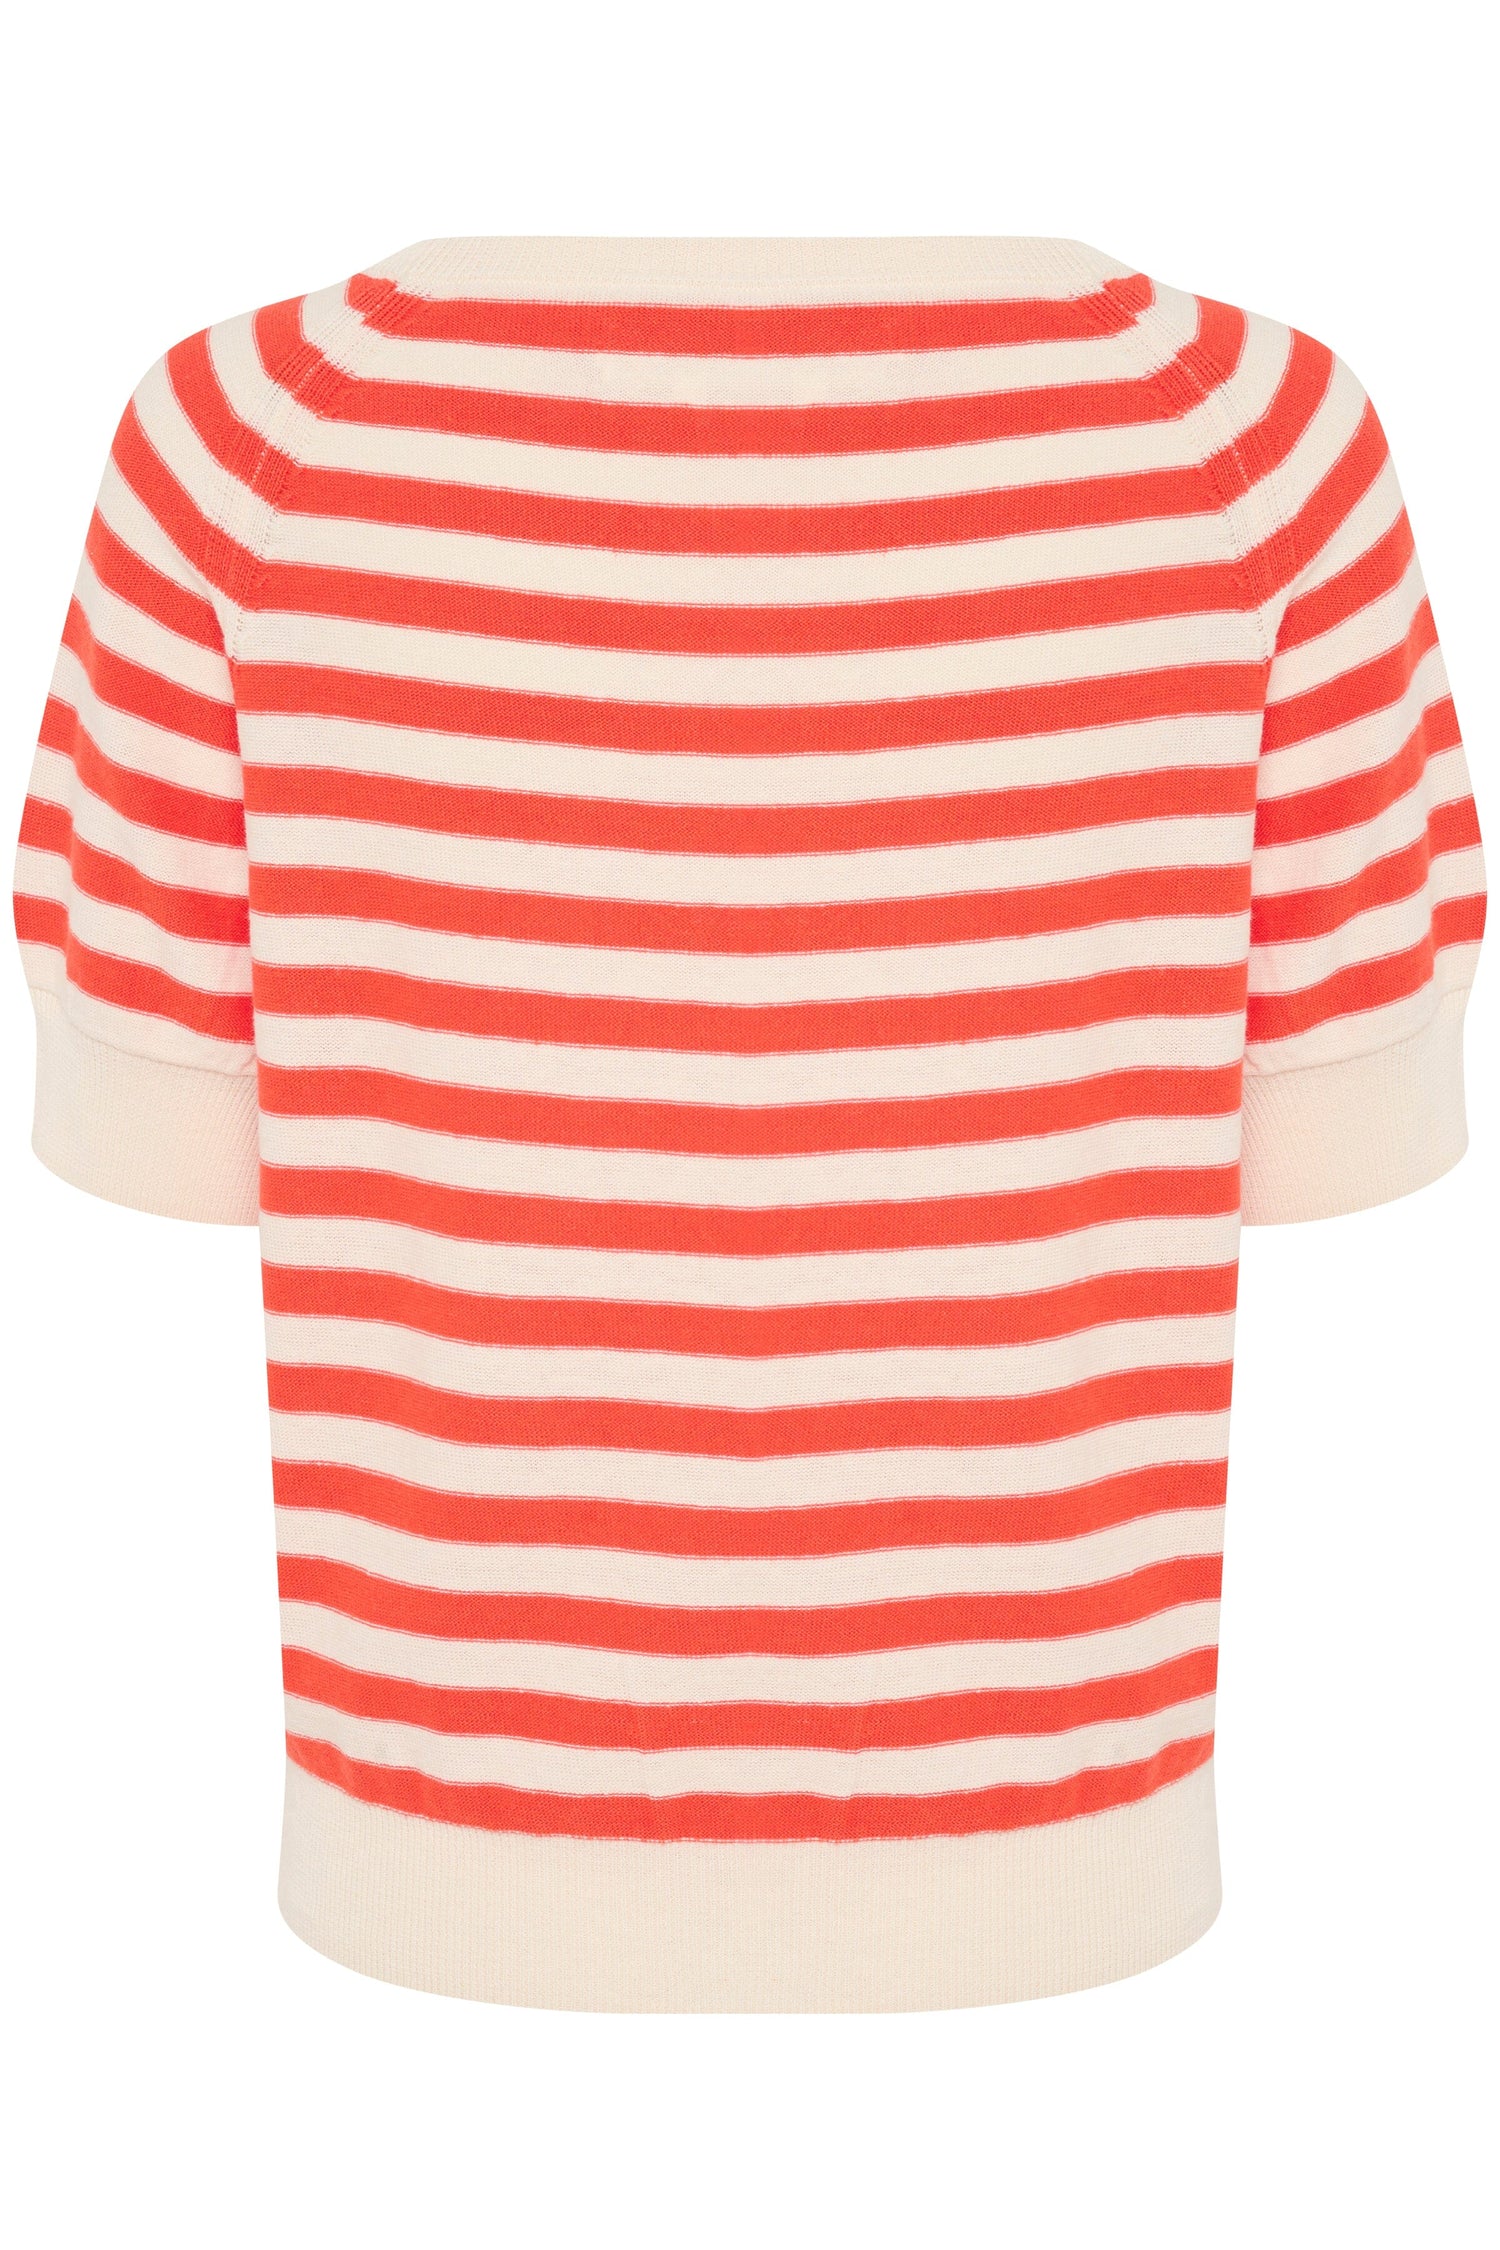 Glennie Top | Mandarin Red Stripe Cardigan Part Two 